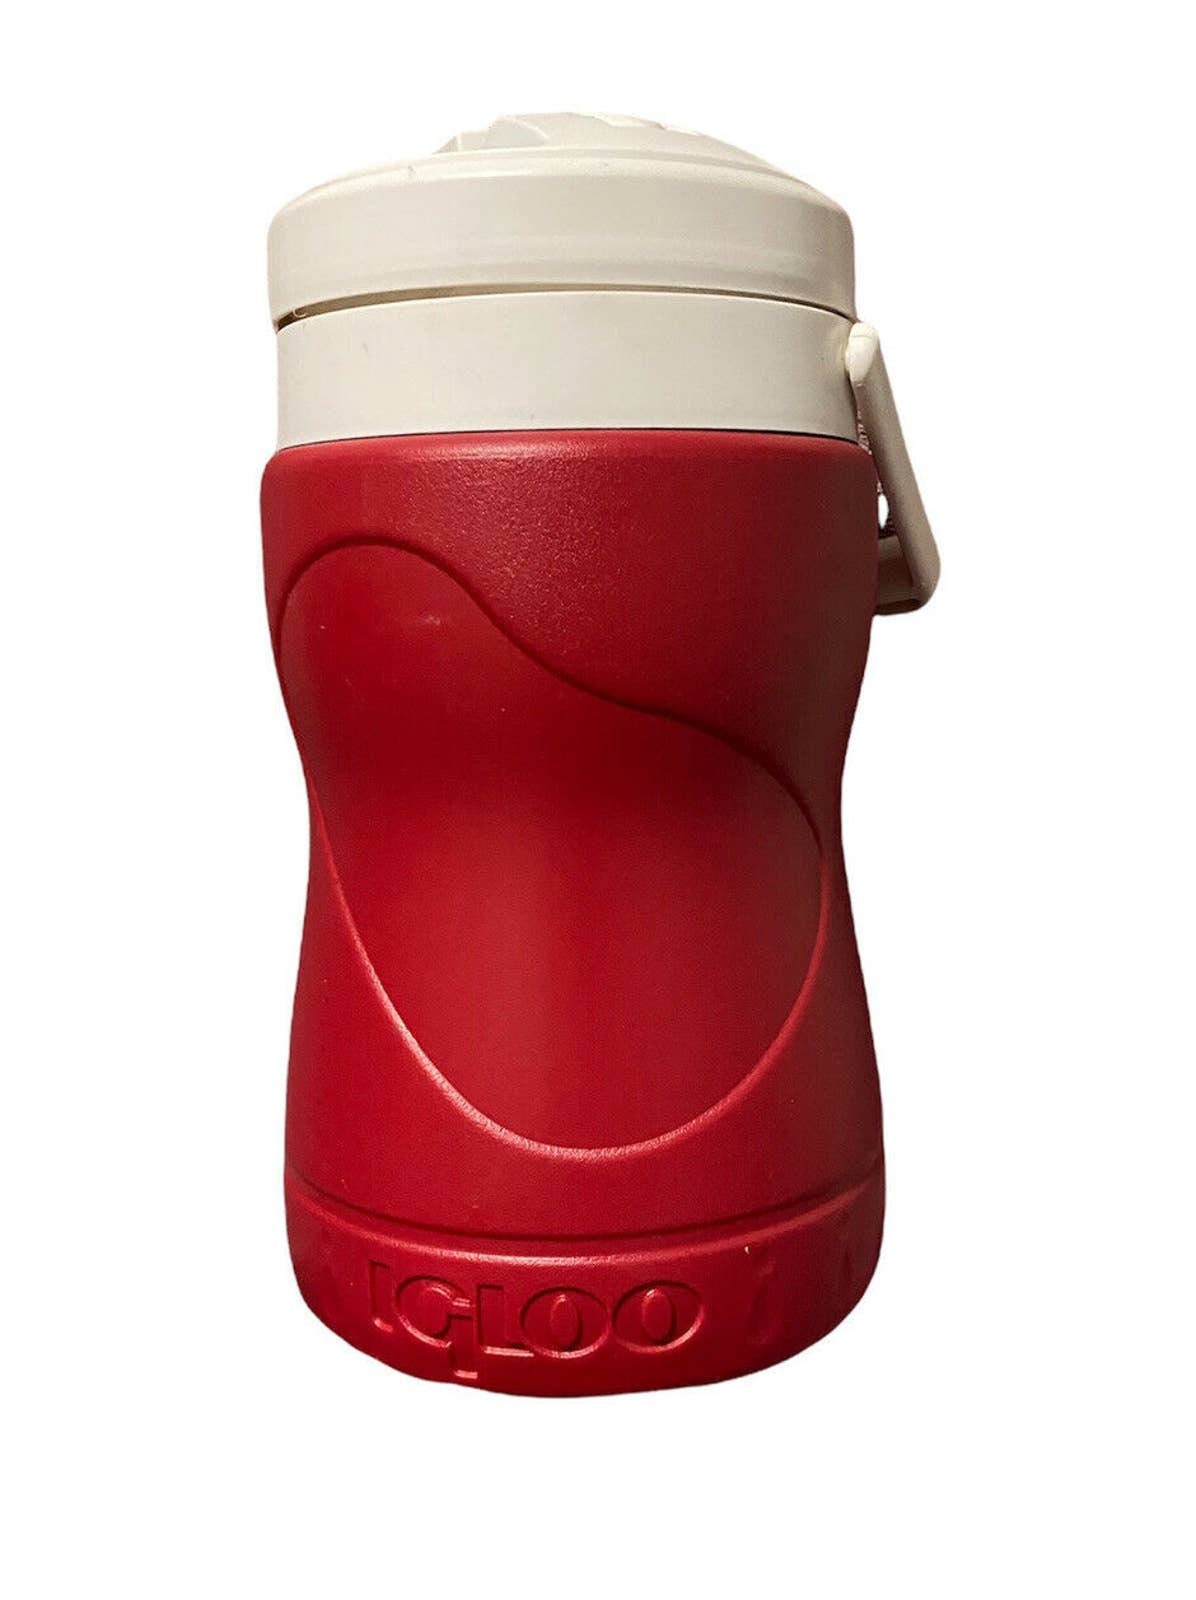 Igloo Beverage Cooler Red 1gal